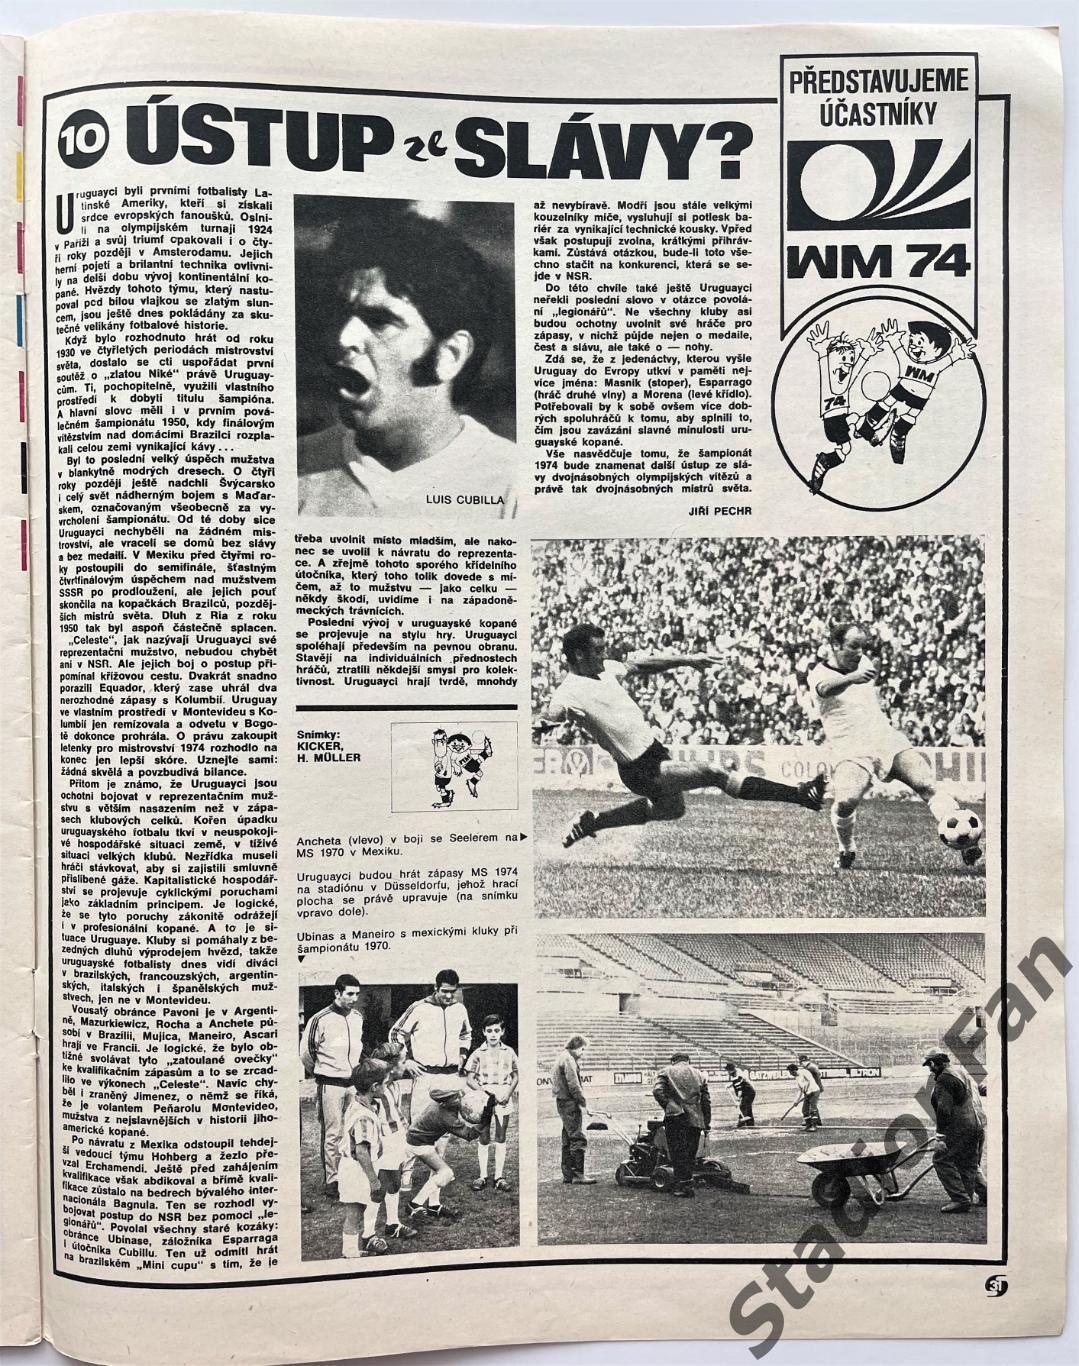 Журнал STADION №17 за 1974 год. 1